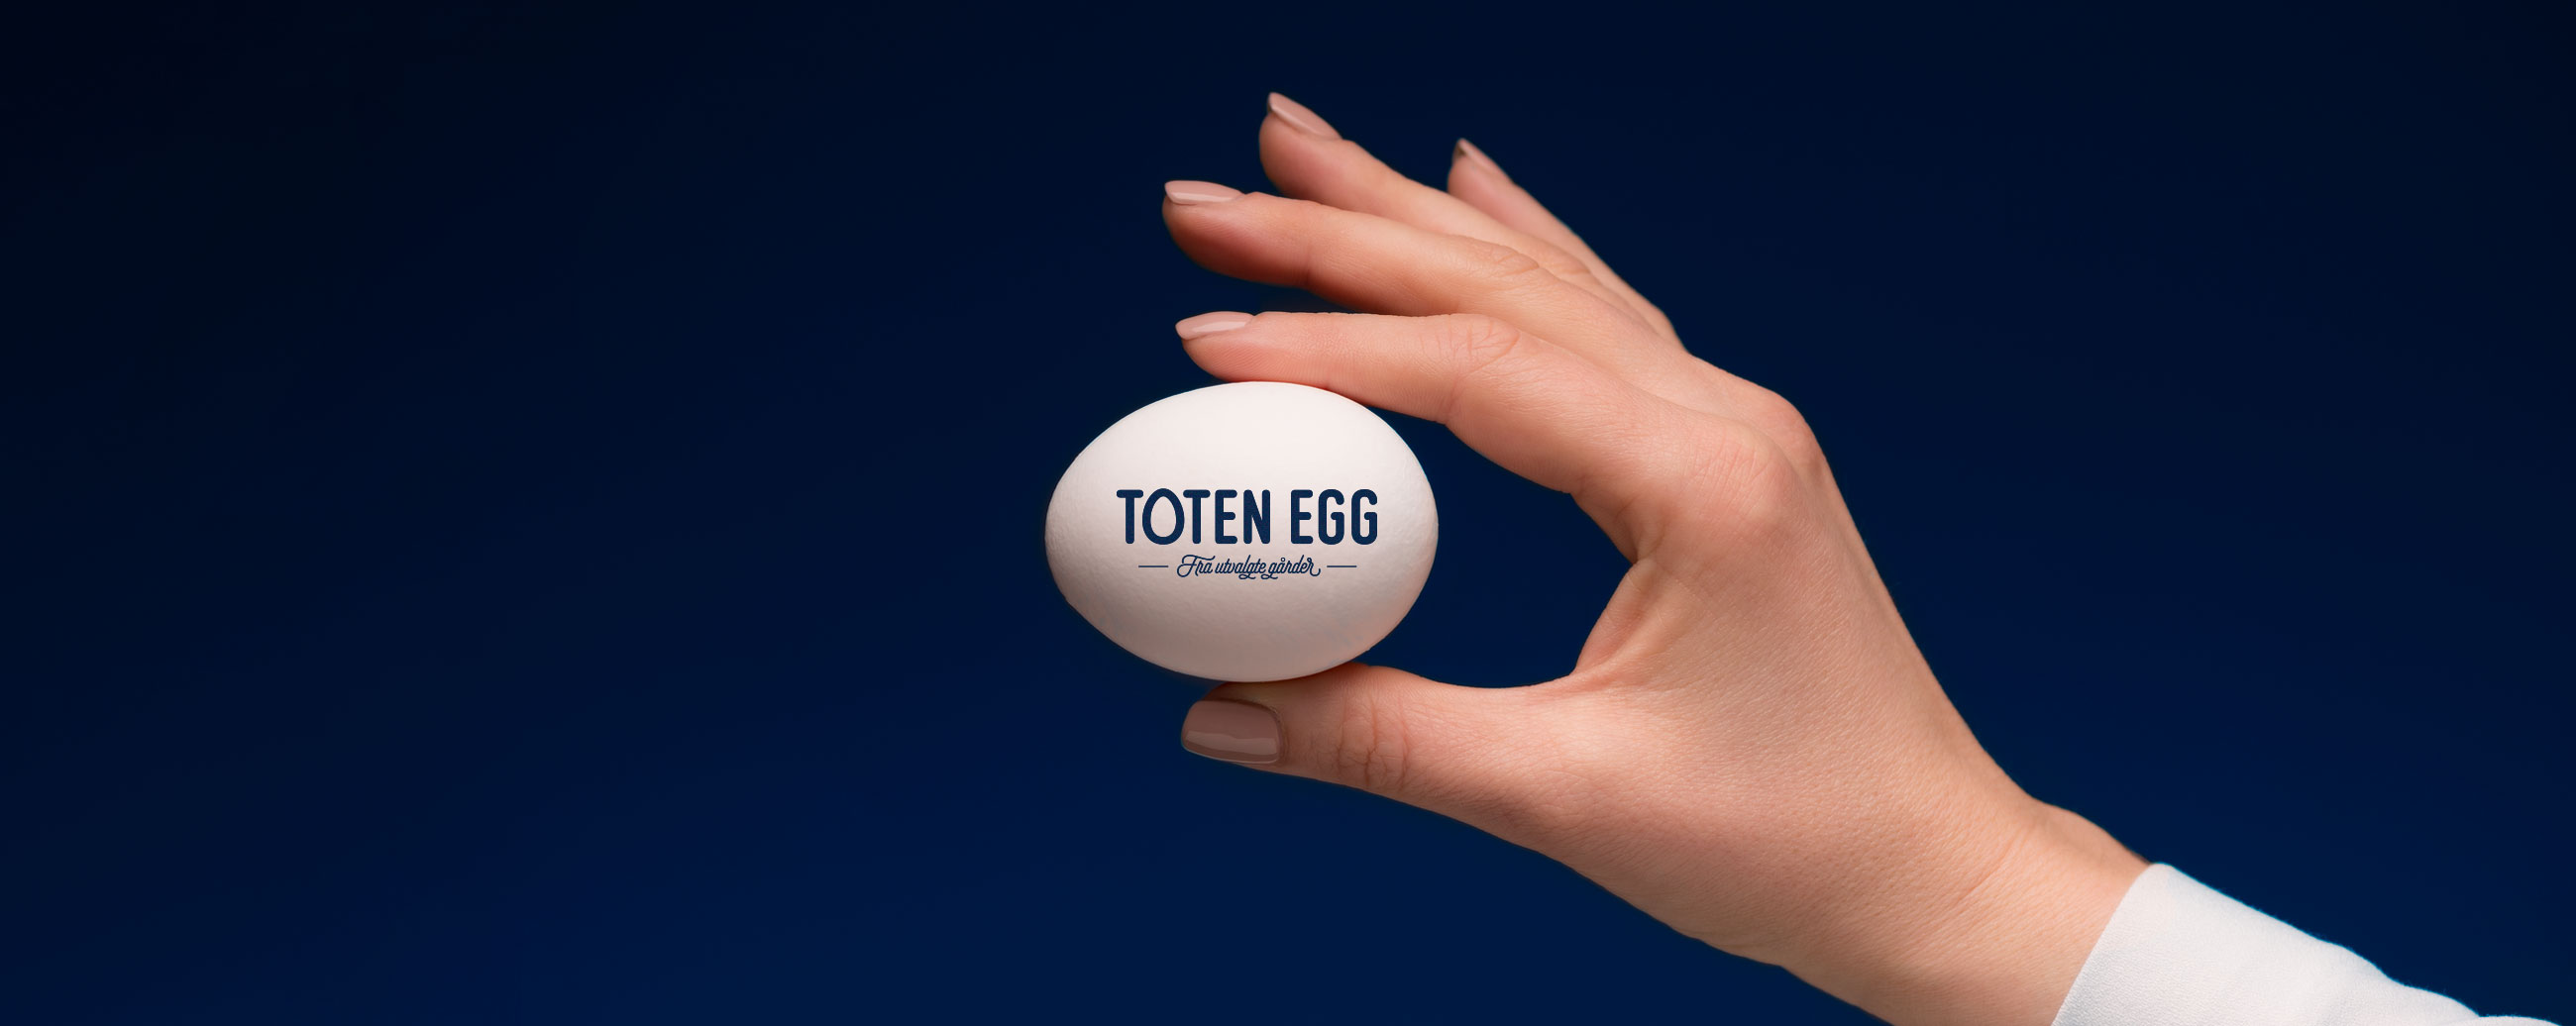 Toten egg logo på egg. Visuell identitet visual identity.